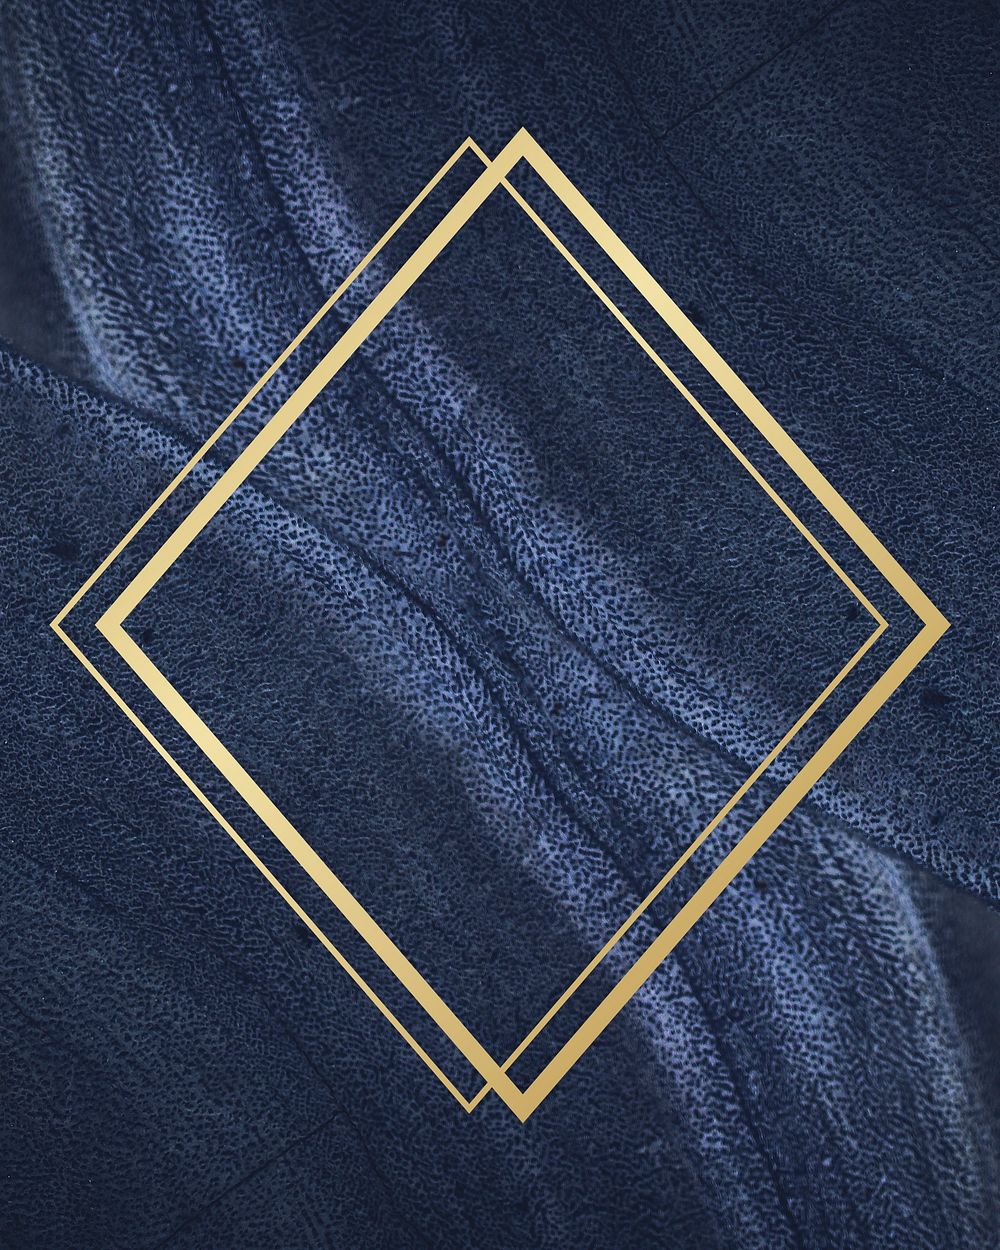 Golden framed rhombus on a blue textured illustration